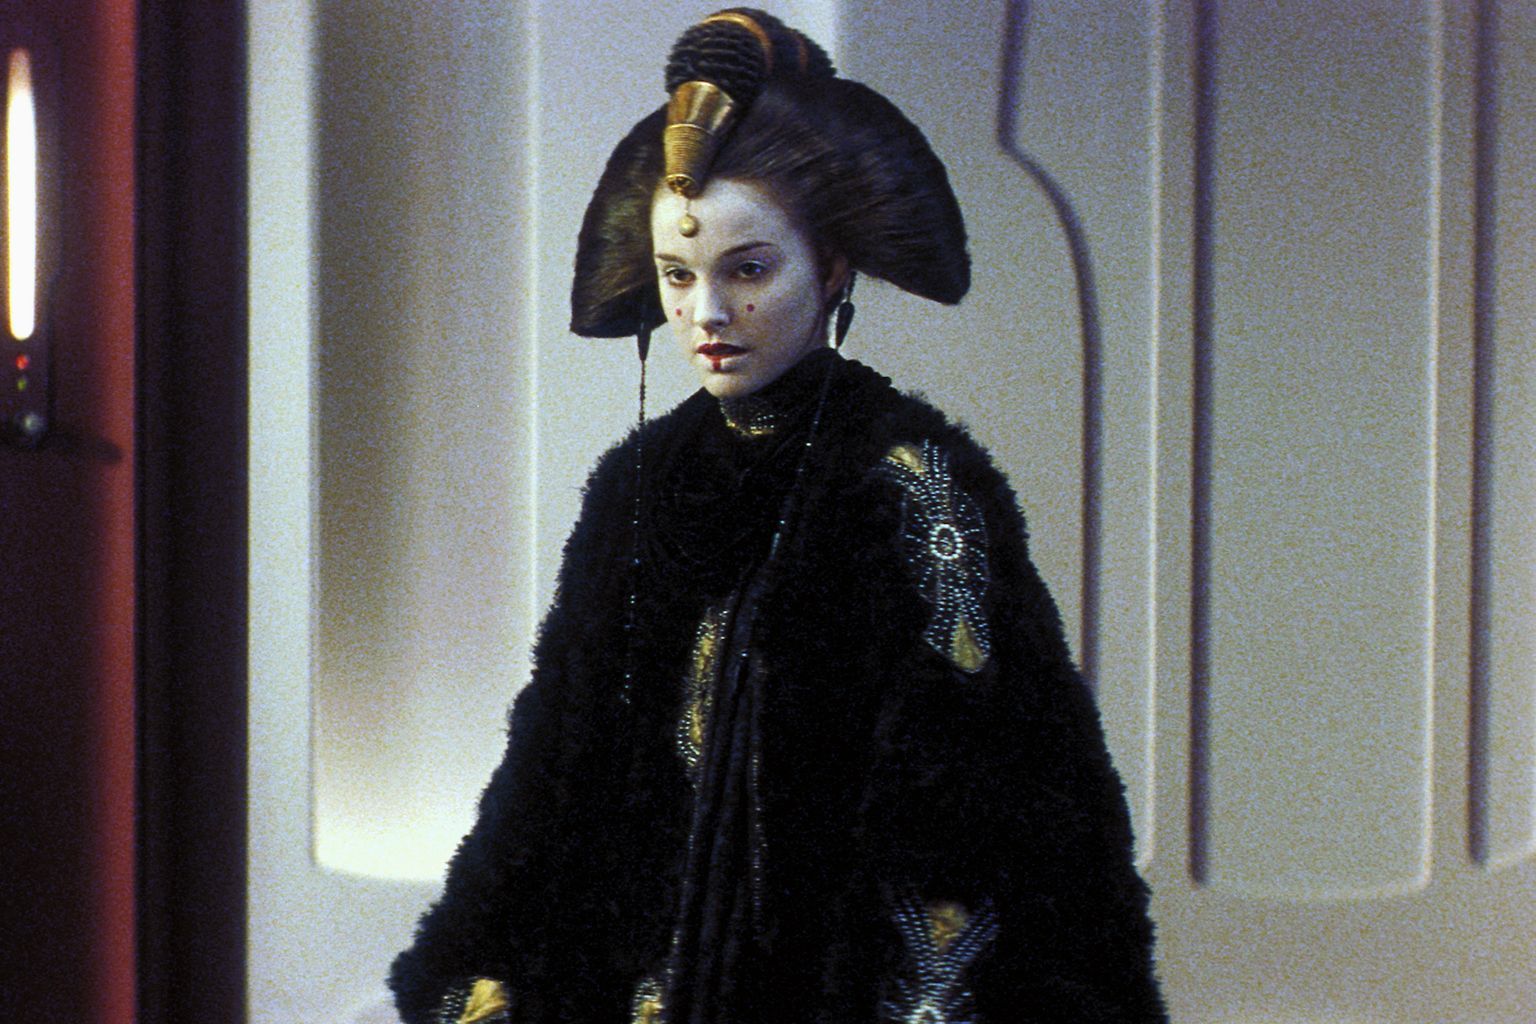 Still of Natalie Portman in Zvaigzdziu karai: epizodas I. Pavojaus seselis 3D (1999)